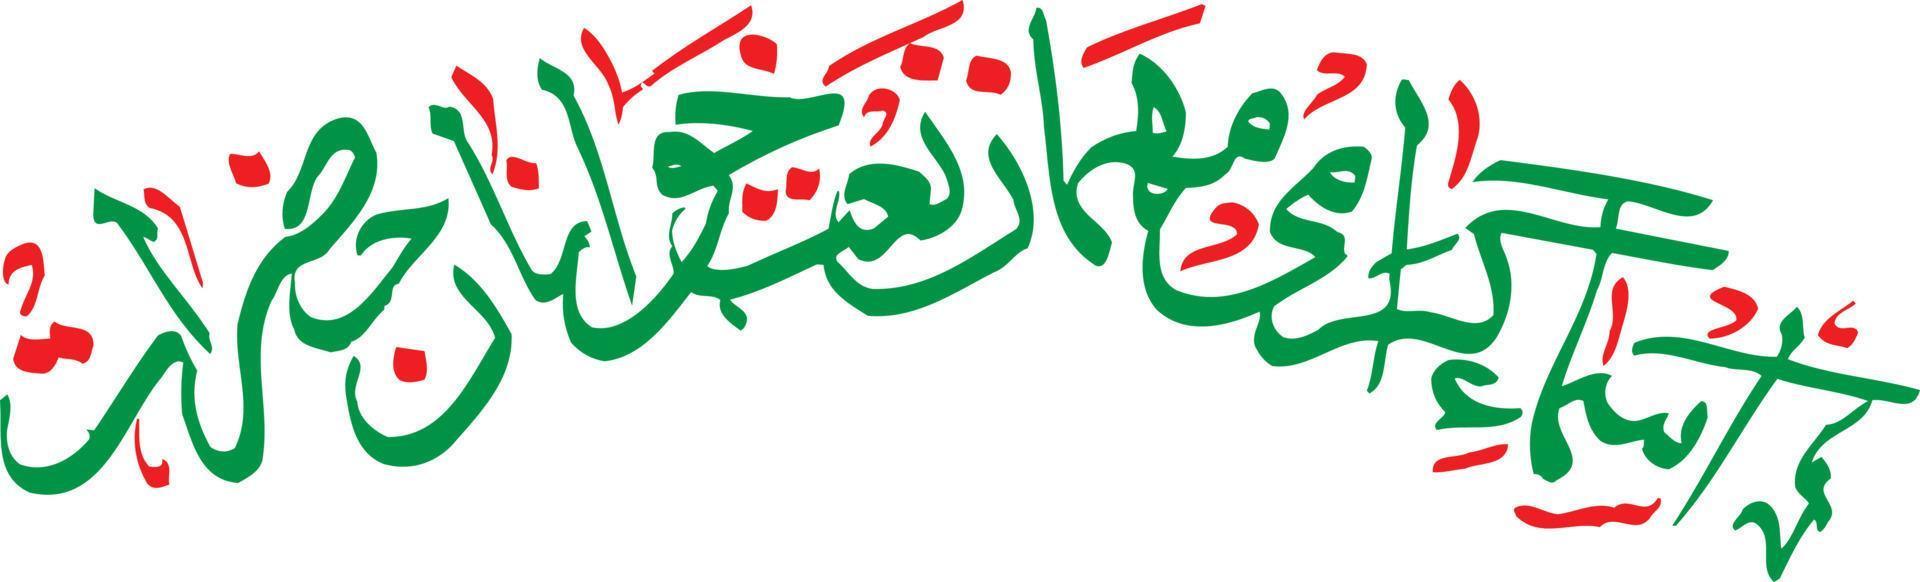 asma grami mhaman naat kwanan título caligrafia árabe islâmica vetor livre